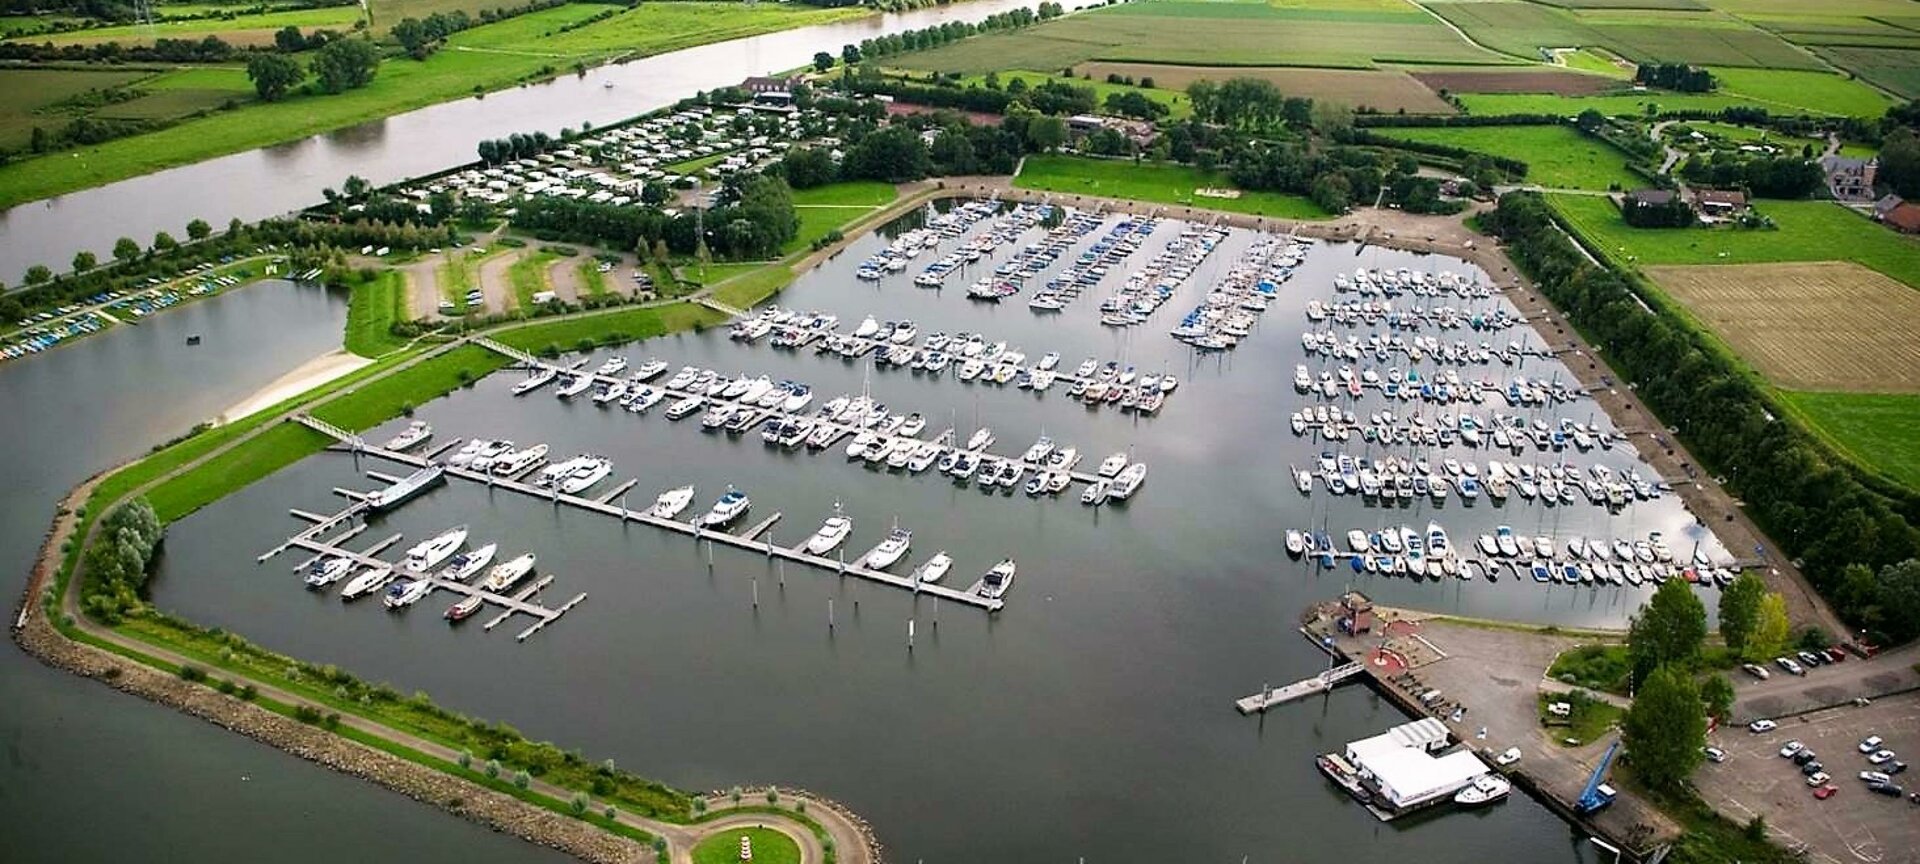 Aqua Libra Yachtcharter - Our homeport : Jachthaven "De Spaenjerd"